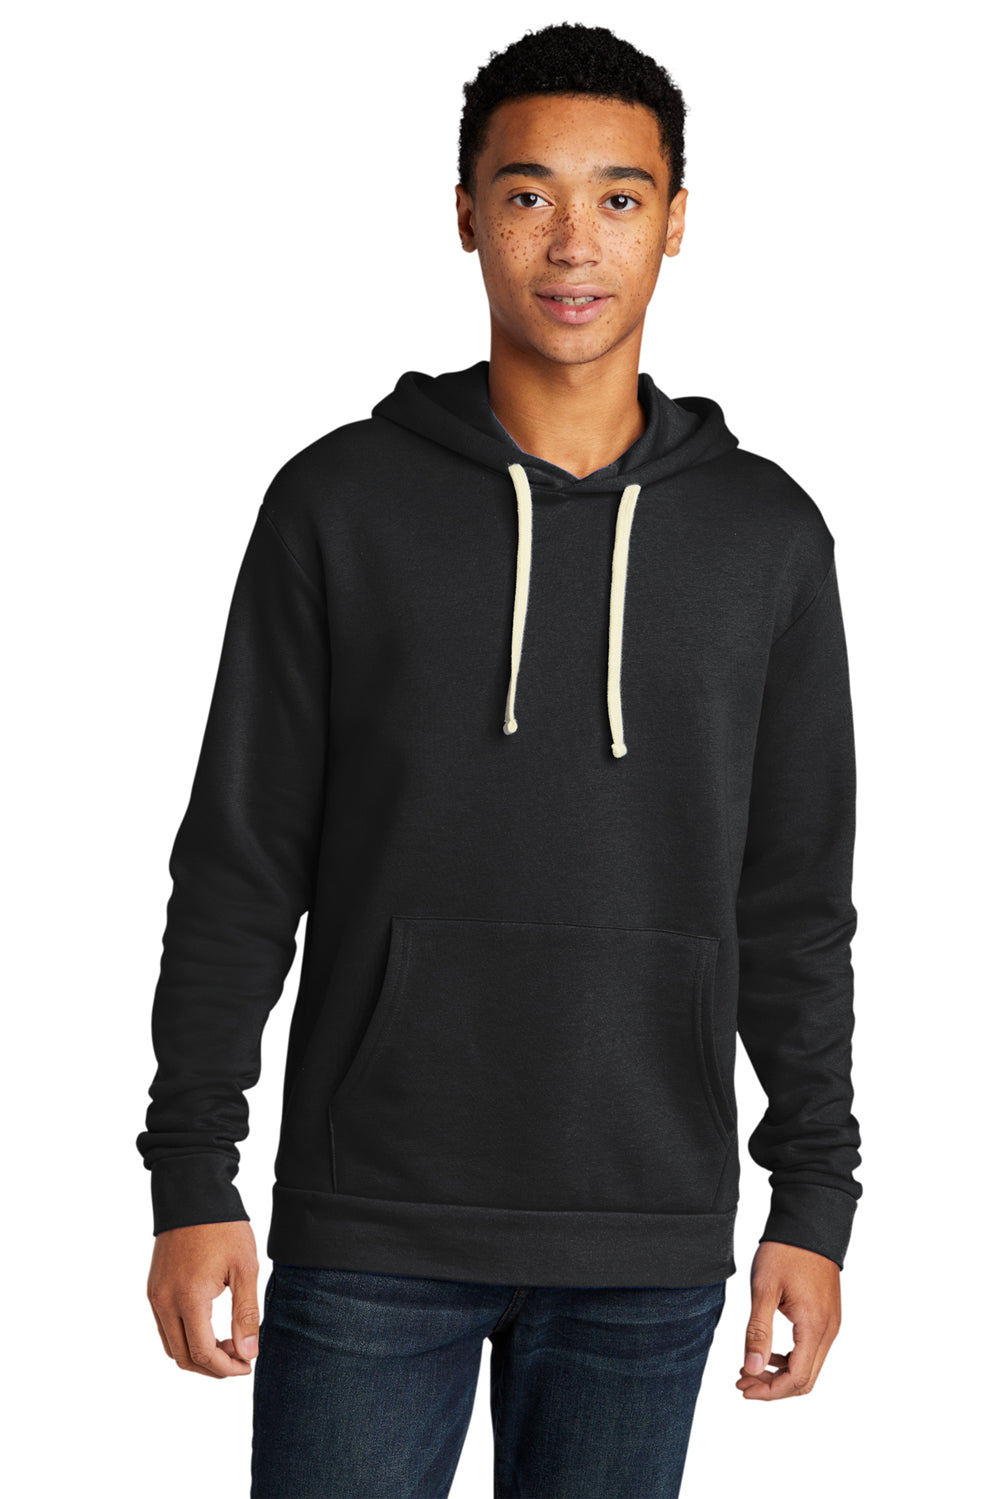 Next Level NL9303/9303 Mens Fleece Hooded Sweatshirt Hoodie Graphite Black Front